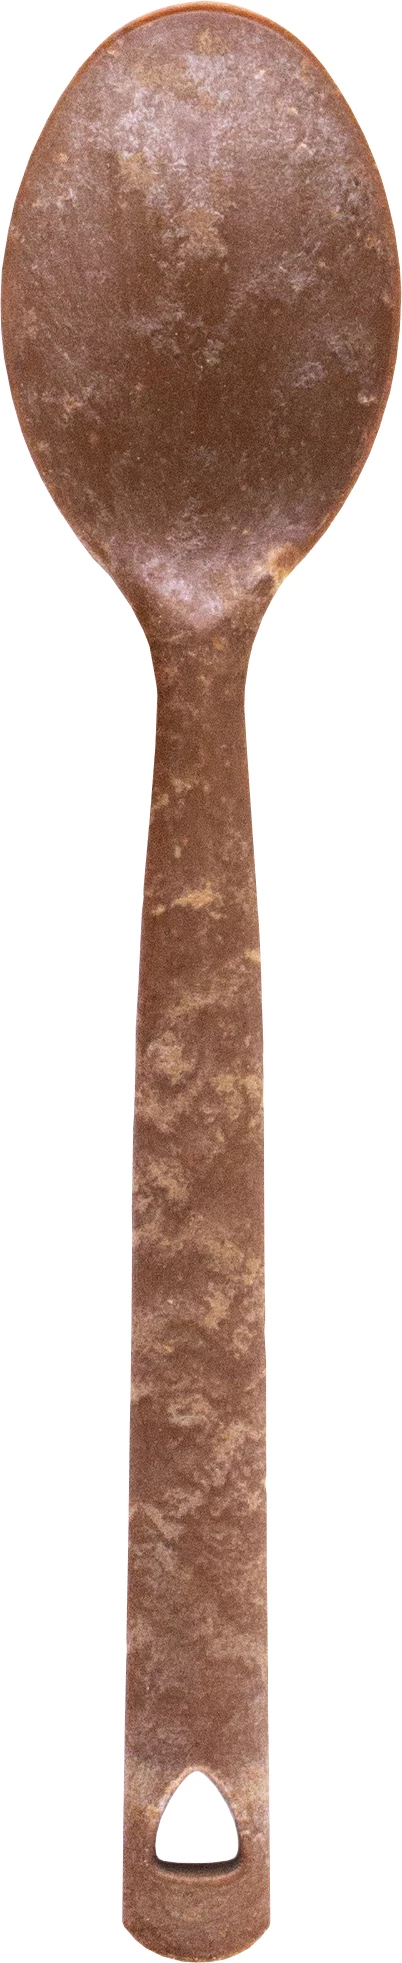 Kupilka teske, brun, 13,5 cm